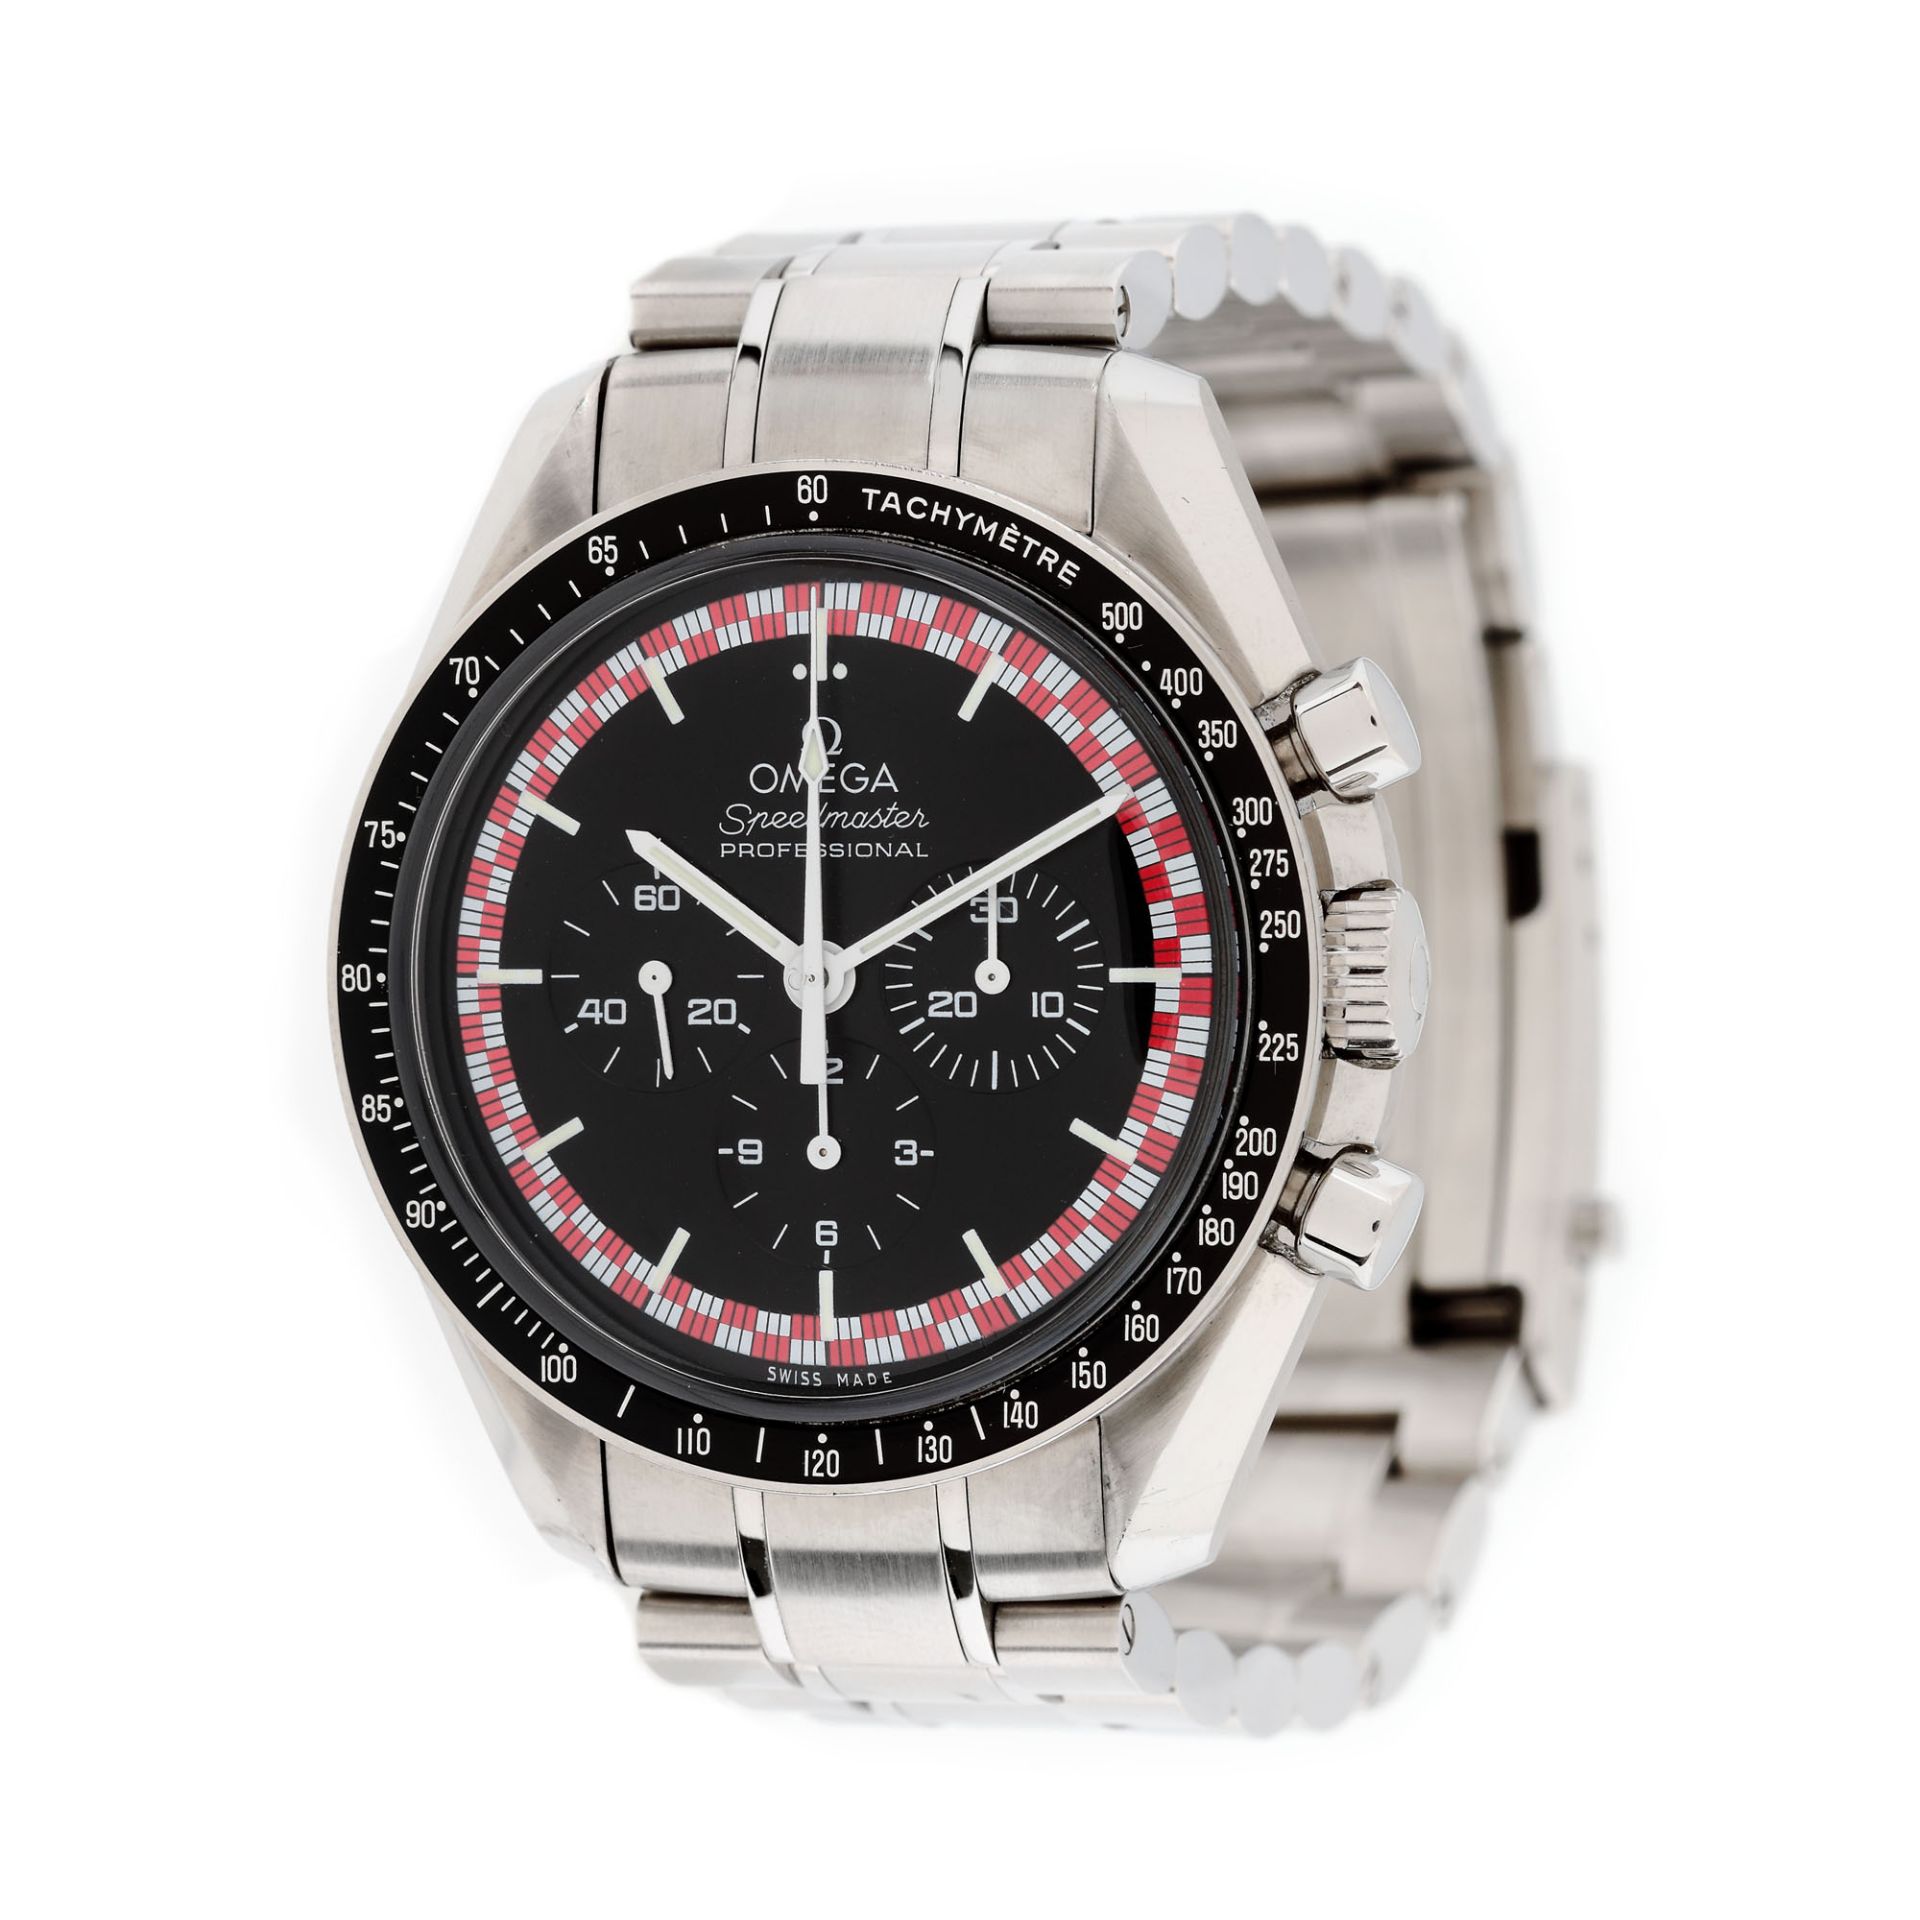 Omega Speedmaster Professional Moonwatch "TinTin" wristwatch, men, original box, collector's item